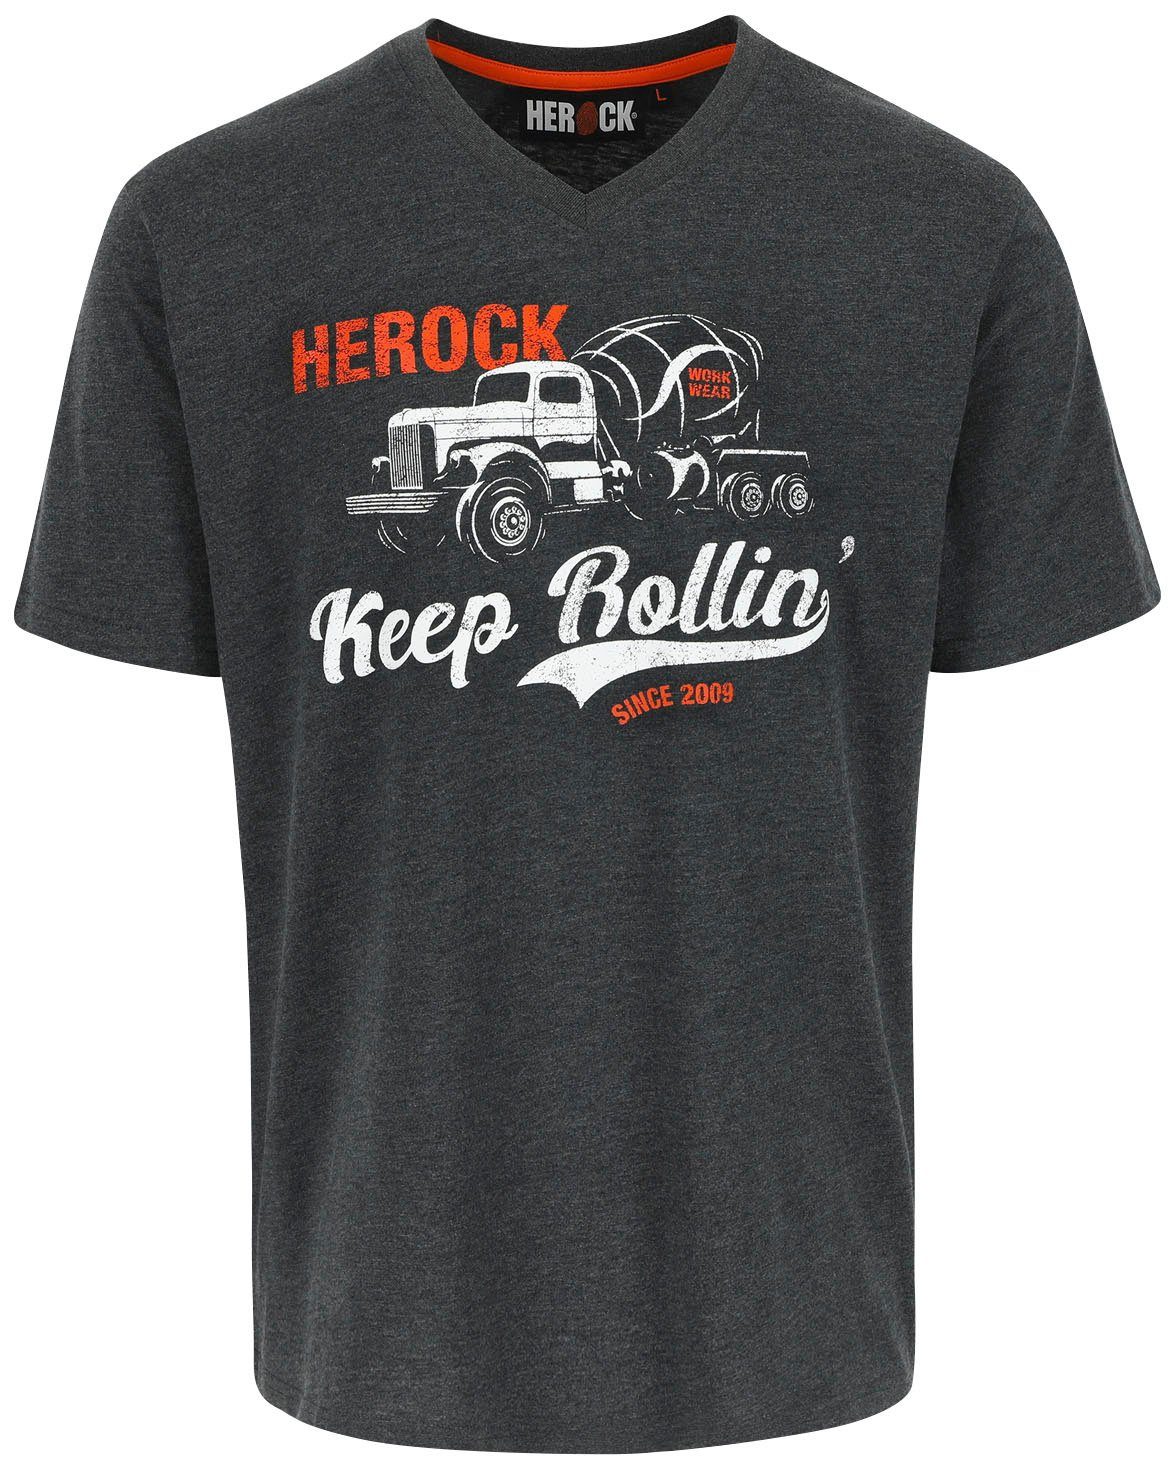 Herock T-Shirt Rollin Limited Edition